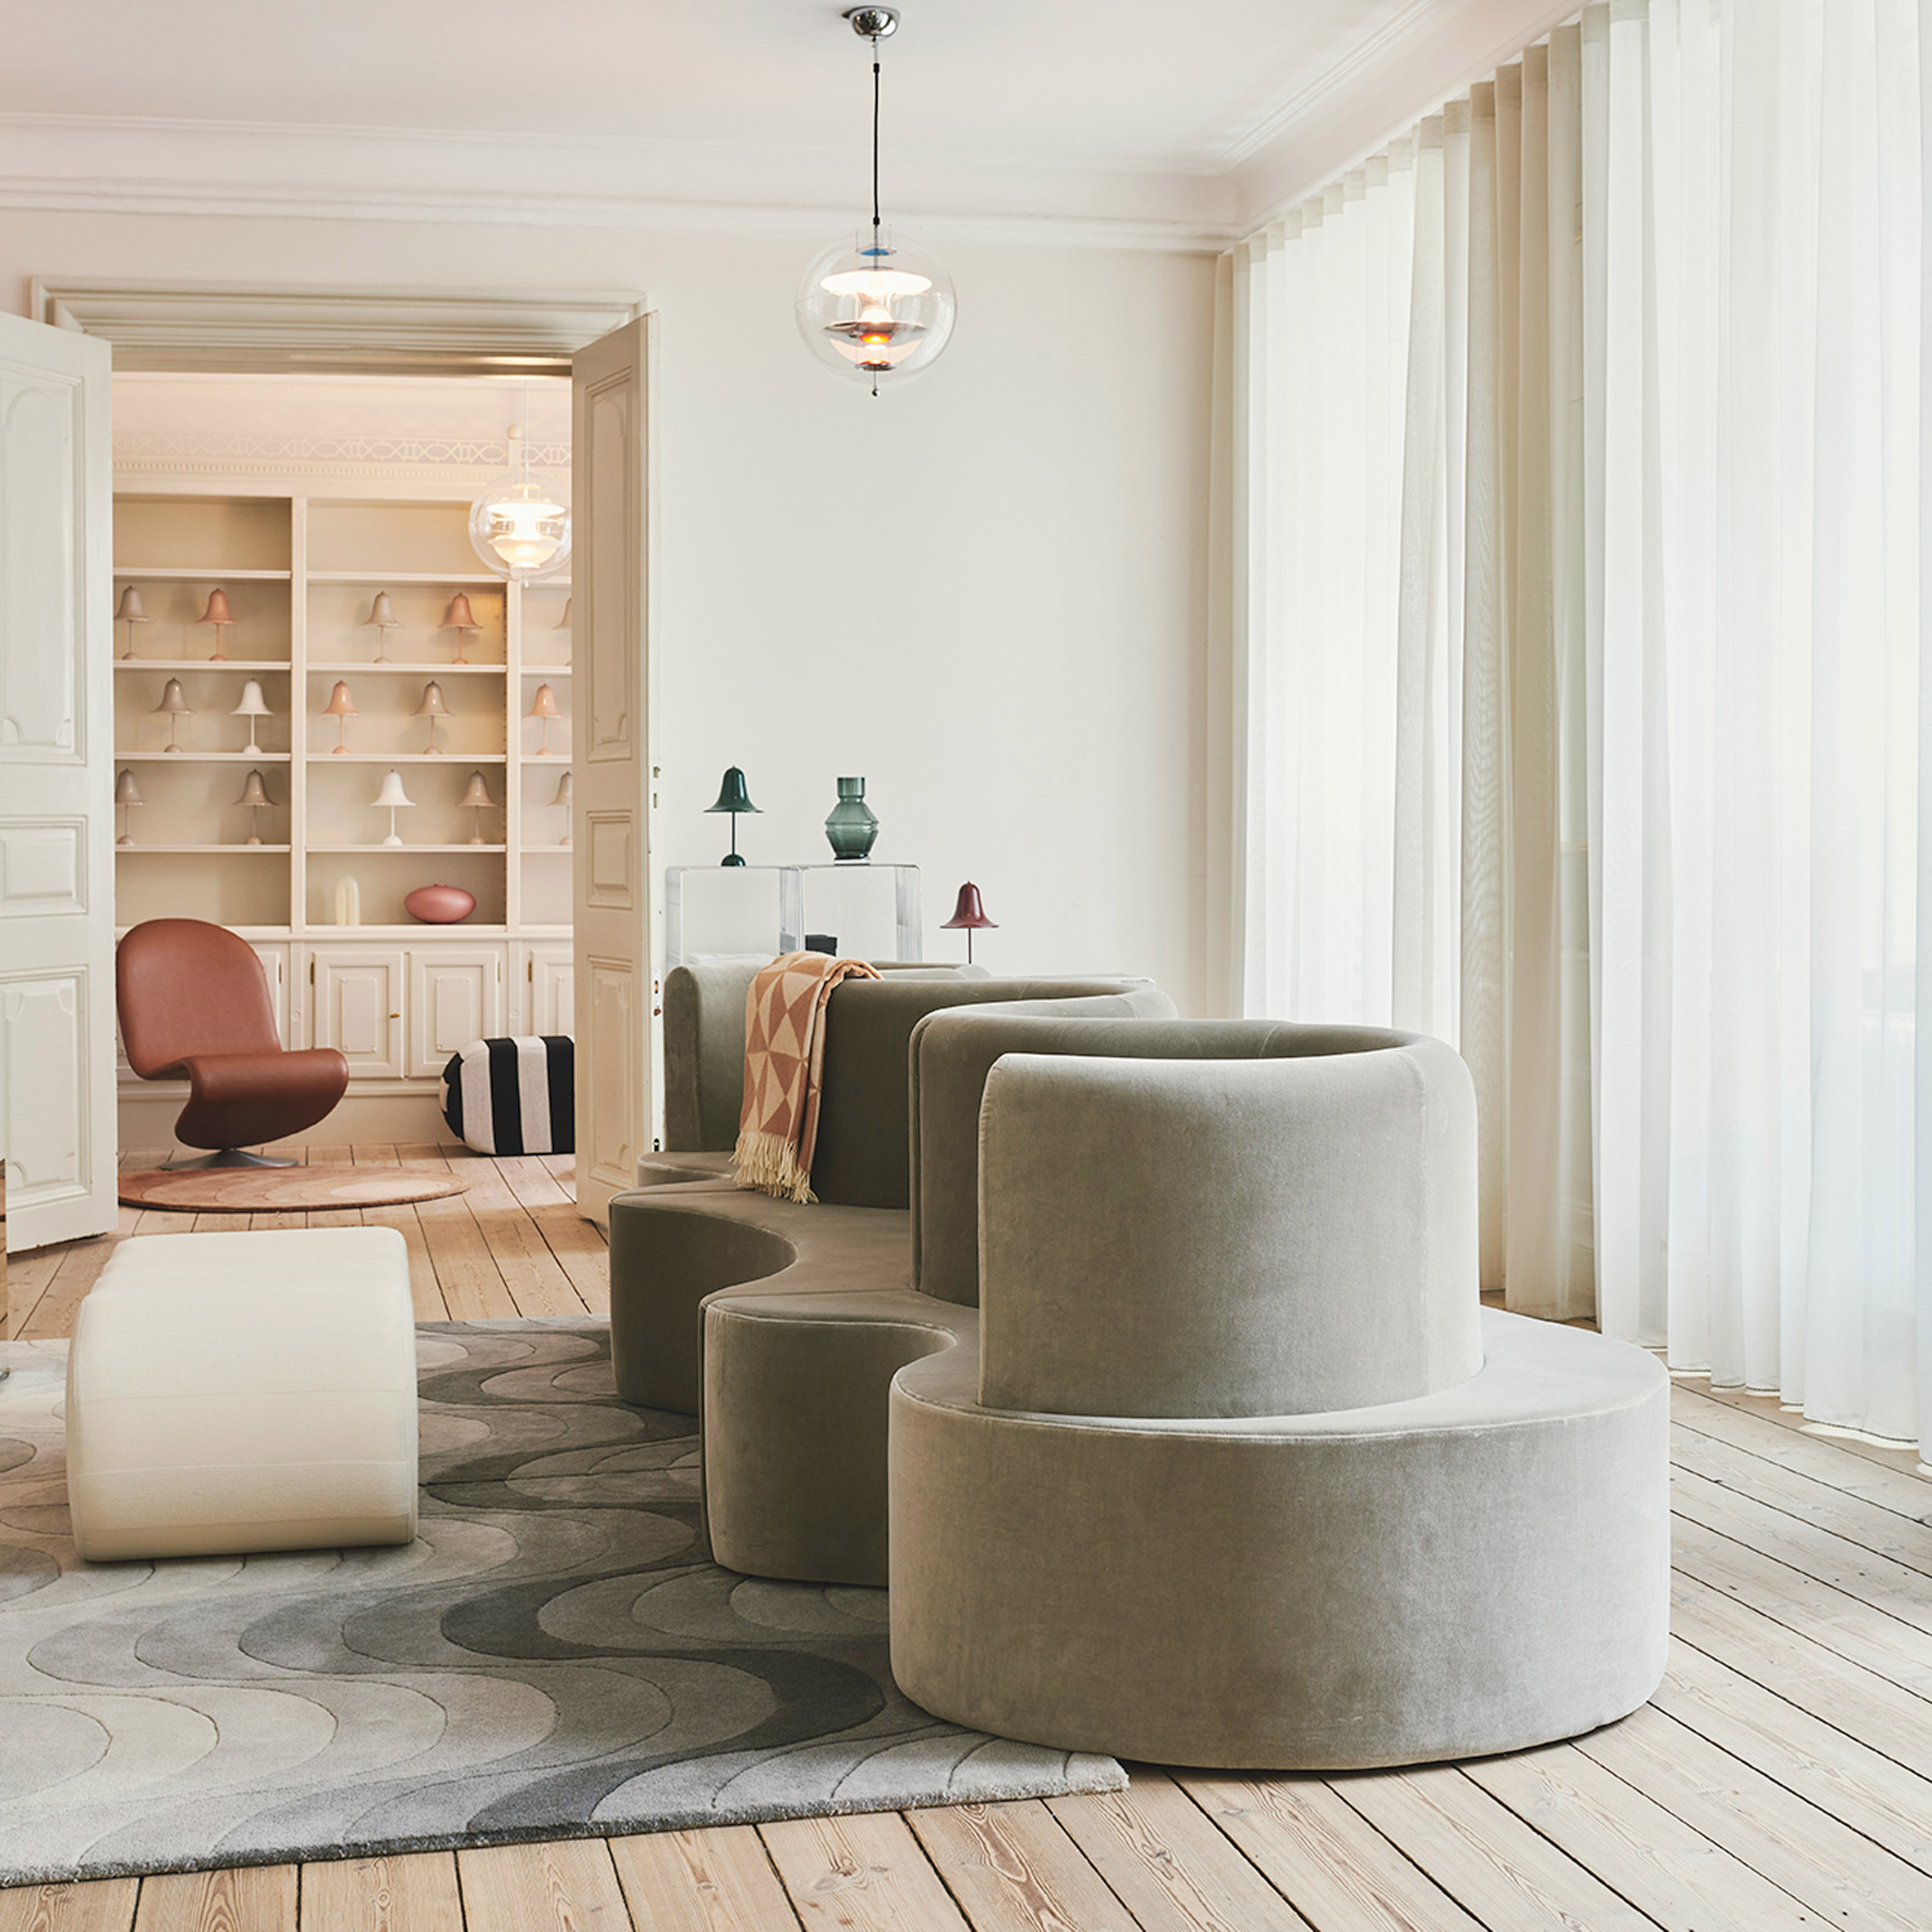 Cloverleaf sofa by Scandinavian furniture brand Verpan